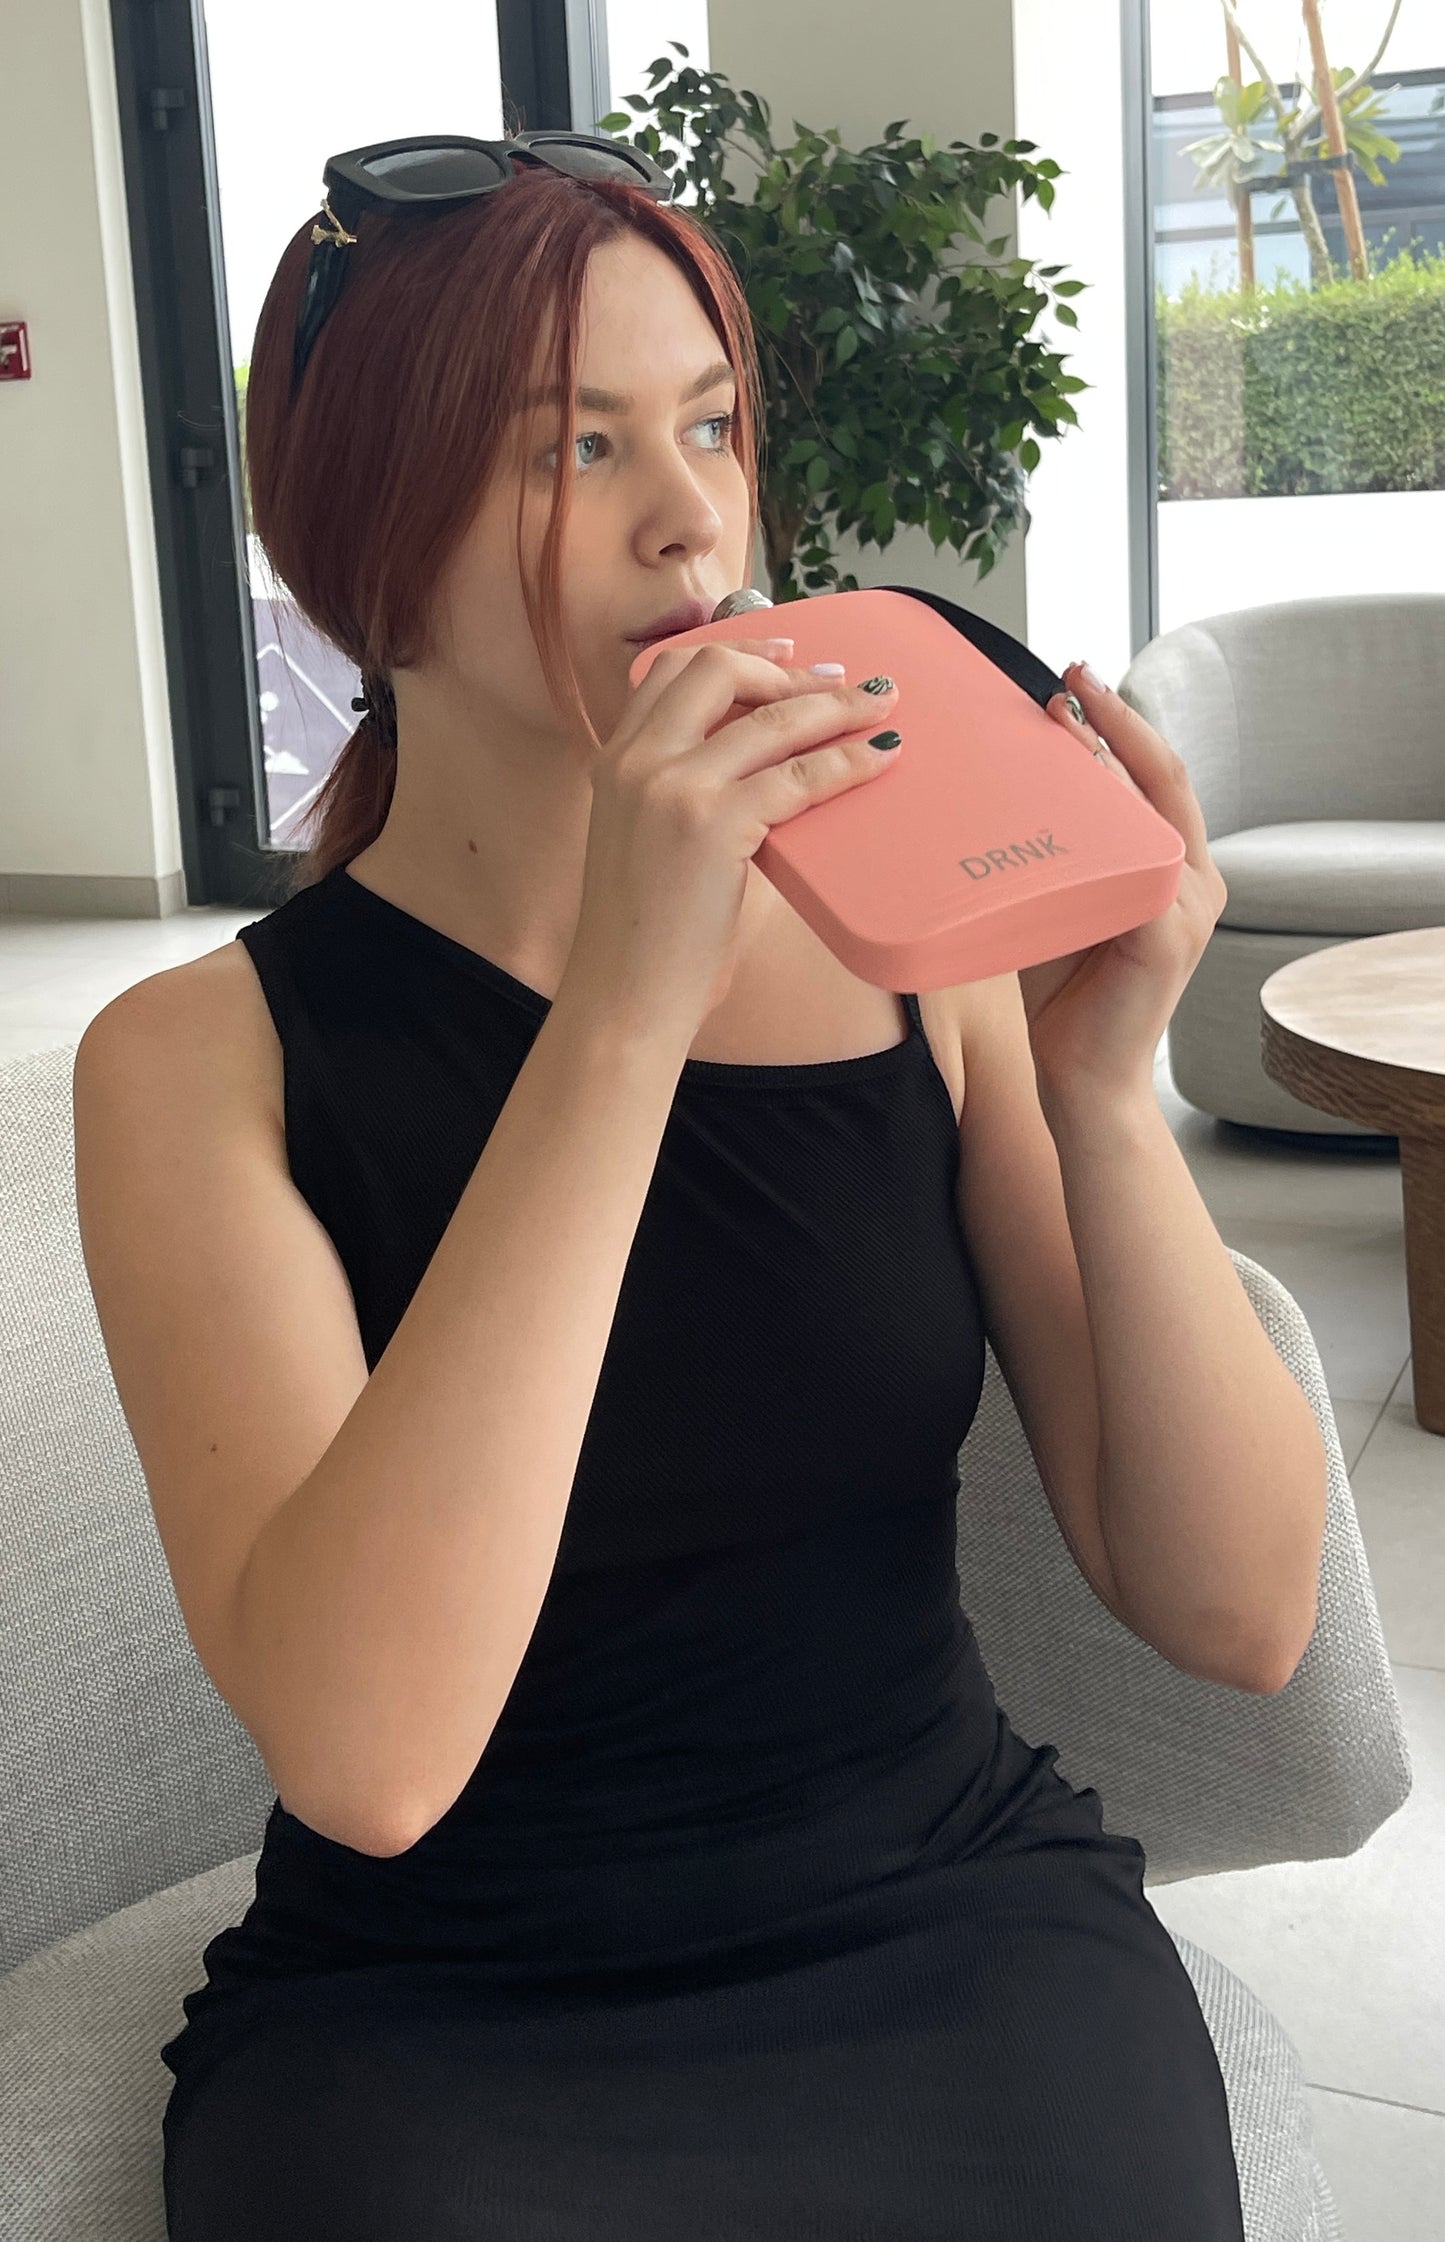 Coral Pink Steel water bottle (500 ml)